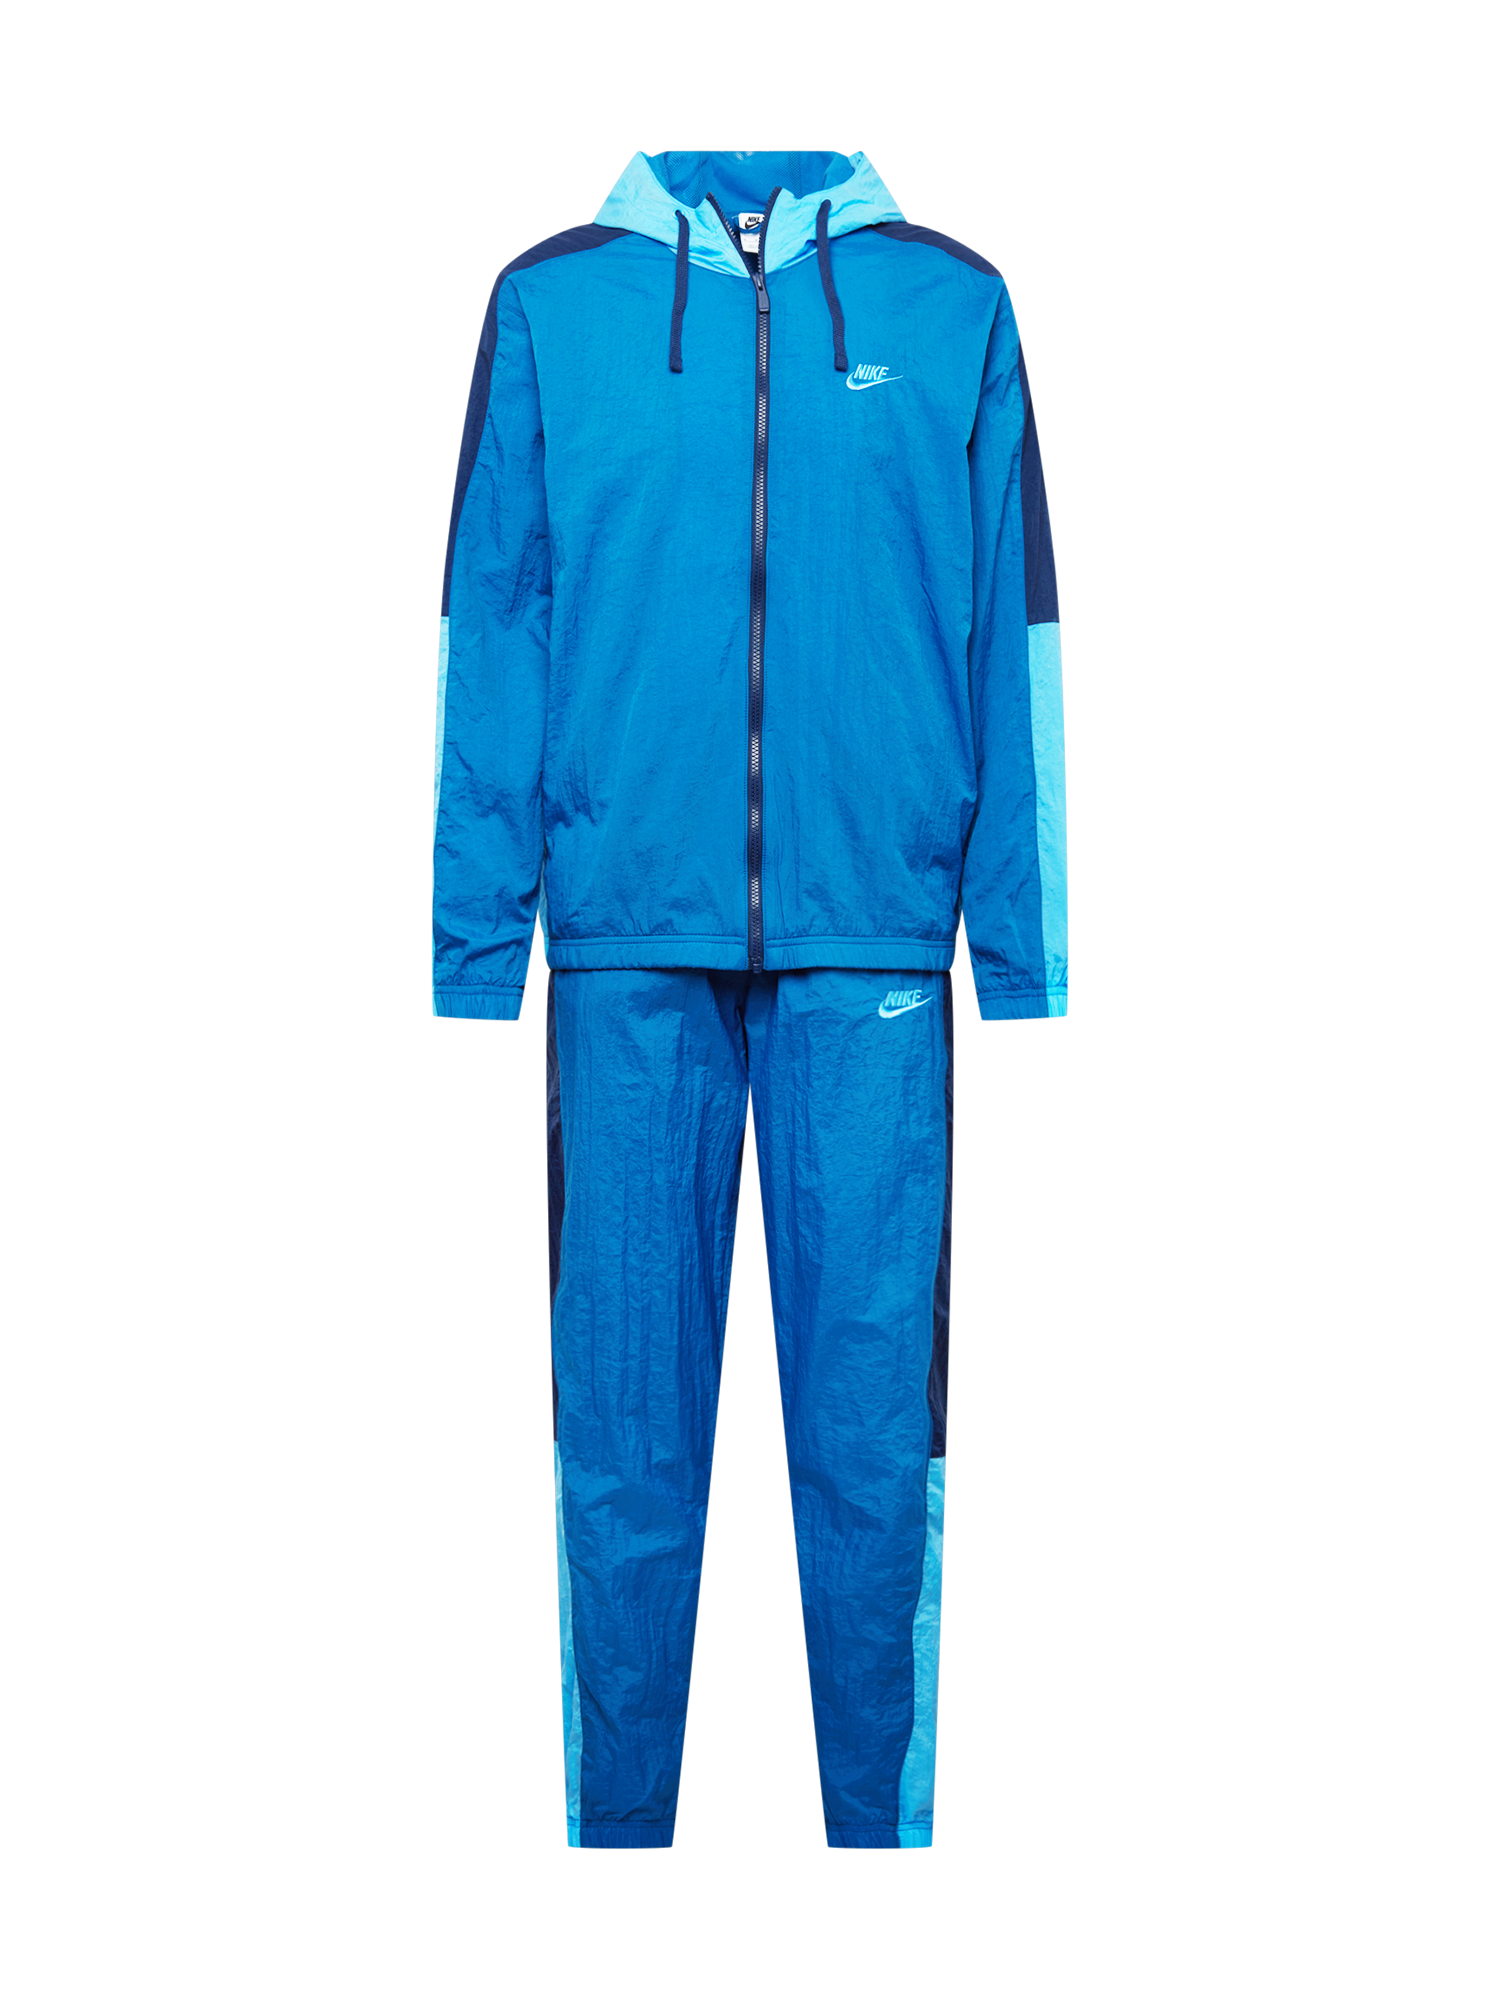 Uomo Xcw4R Nike Sportswear Tuta da jogging in Blu, Acqua, Blu Ultramarino 